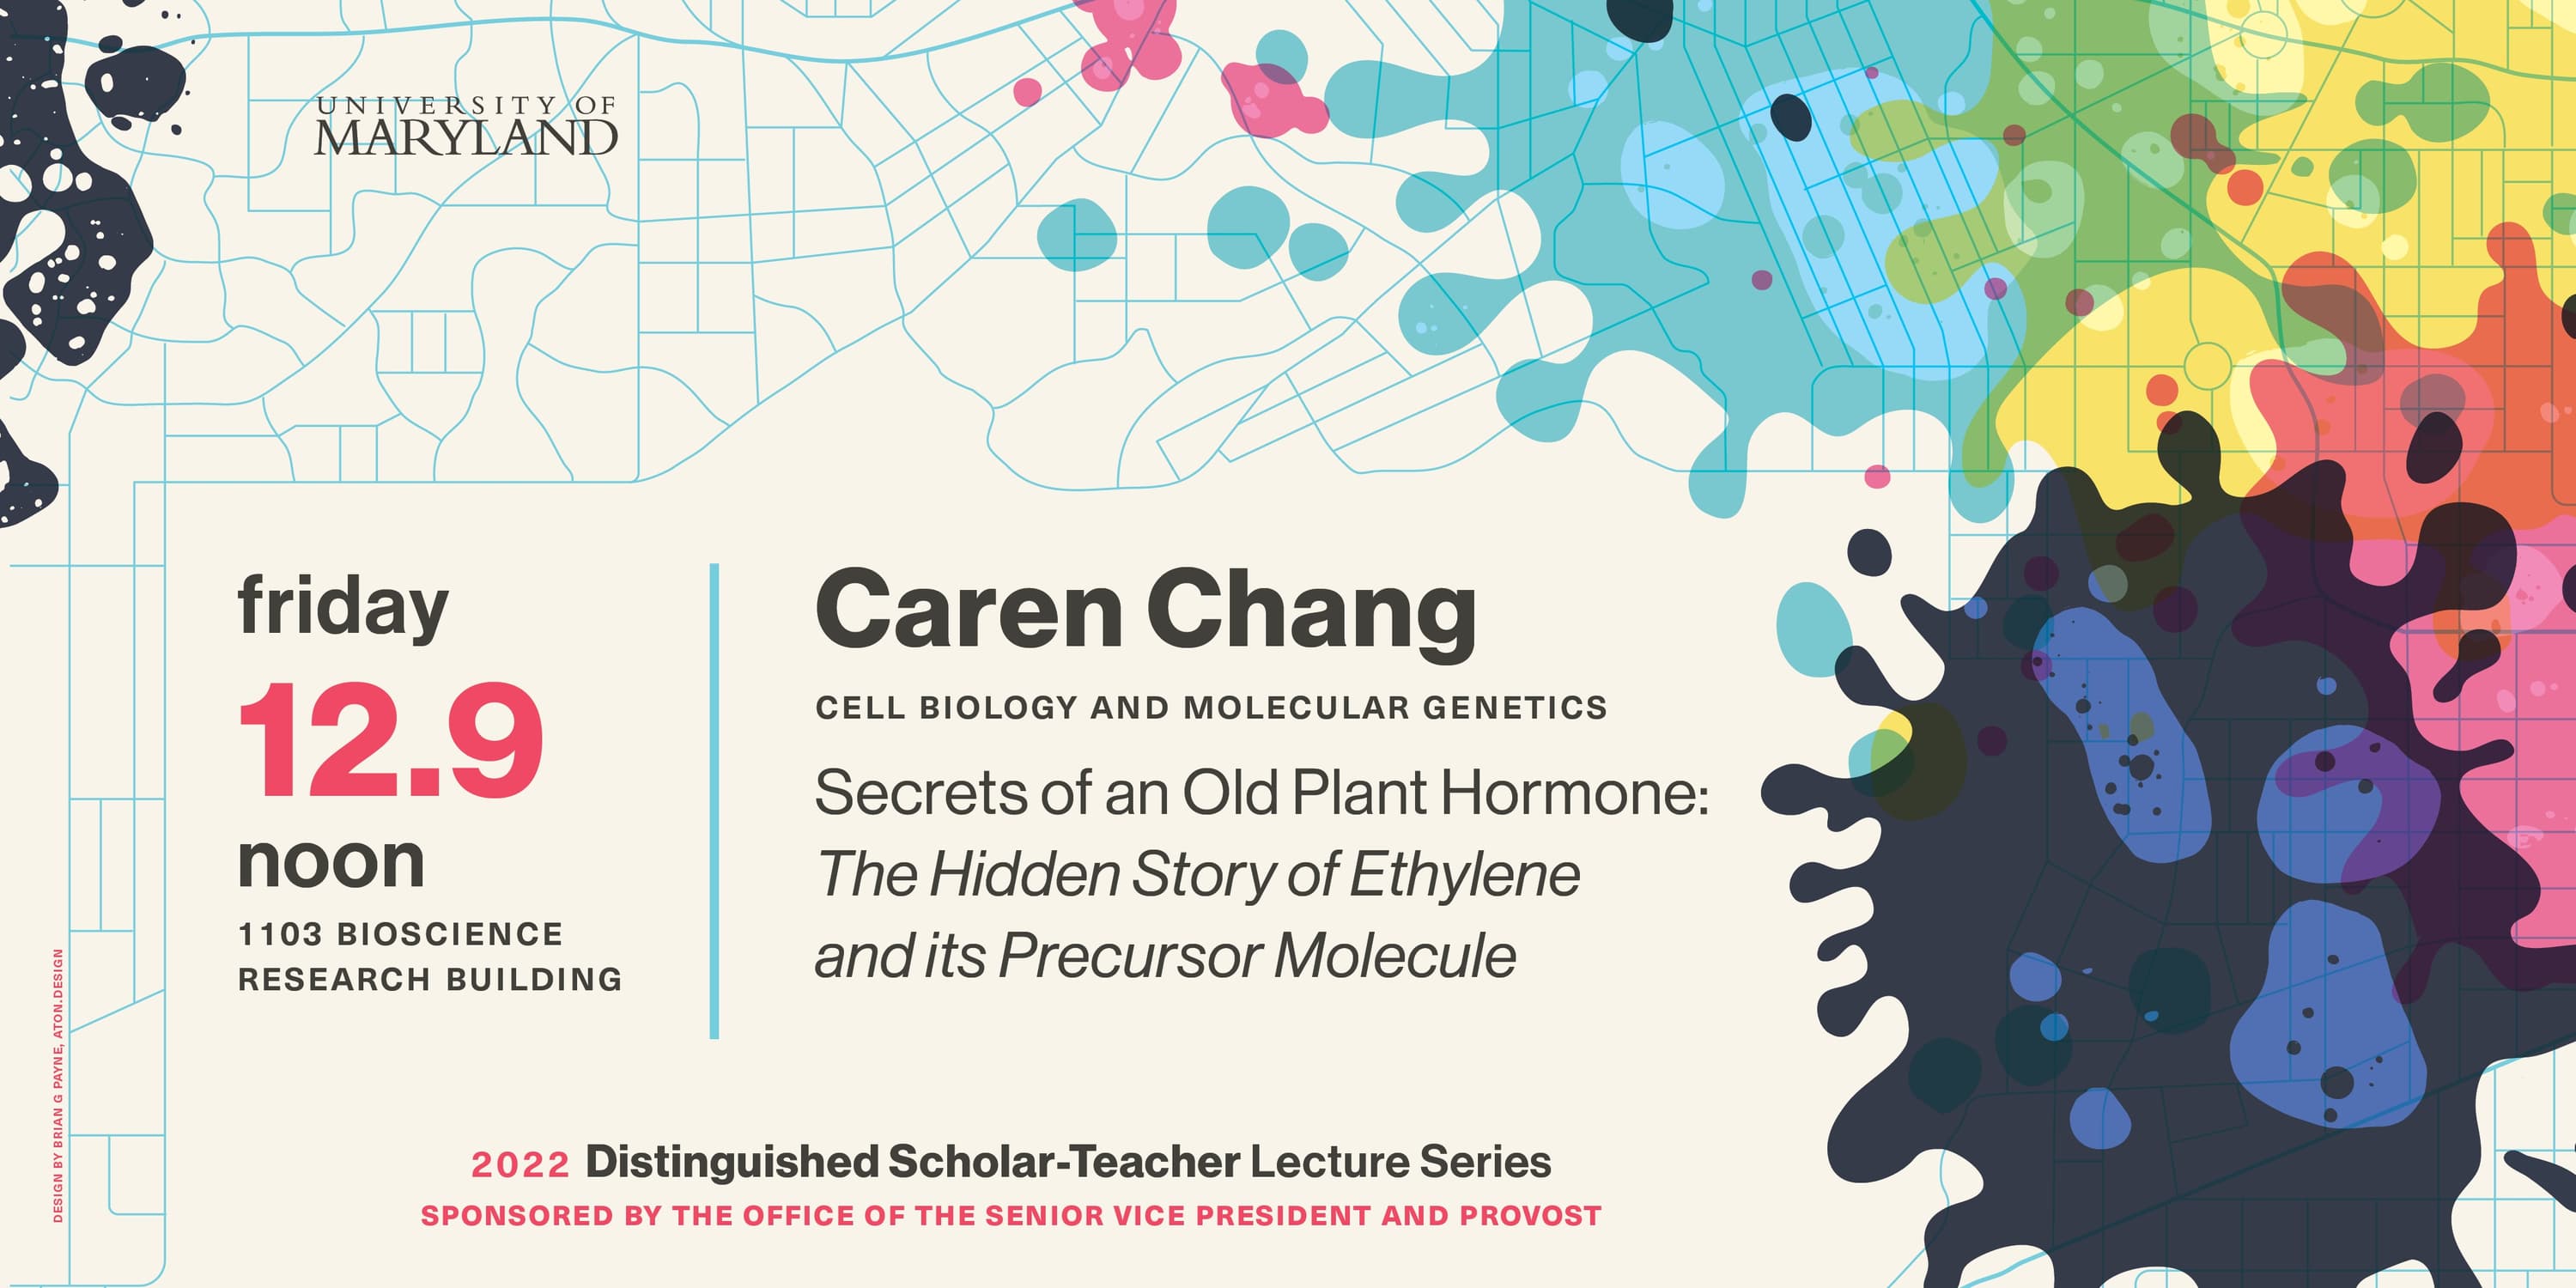 Dr. Caren Chang's Distinguished Scholar-Teacher Poster